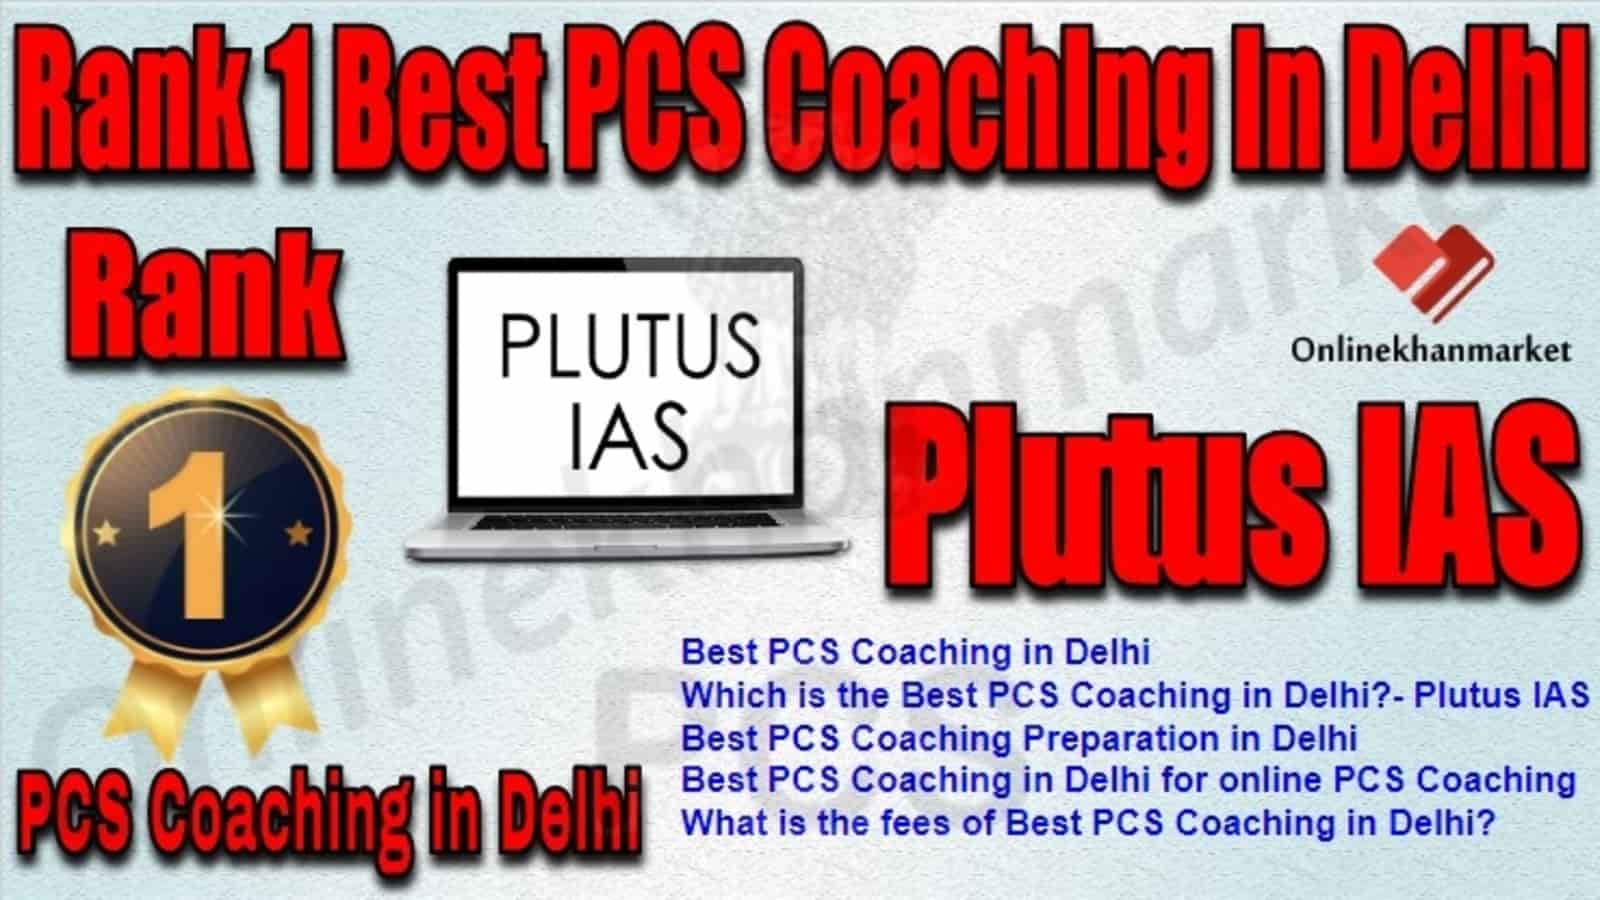 Rank 1 Best PCS Coaching in Delhi